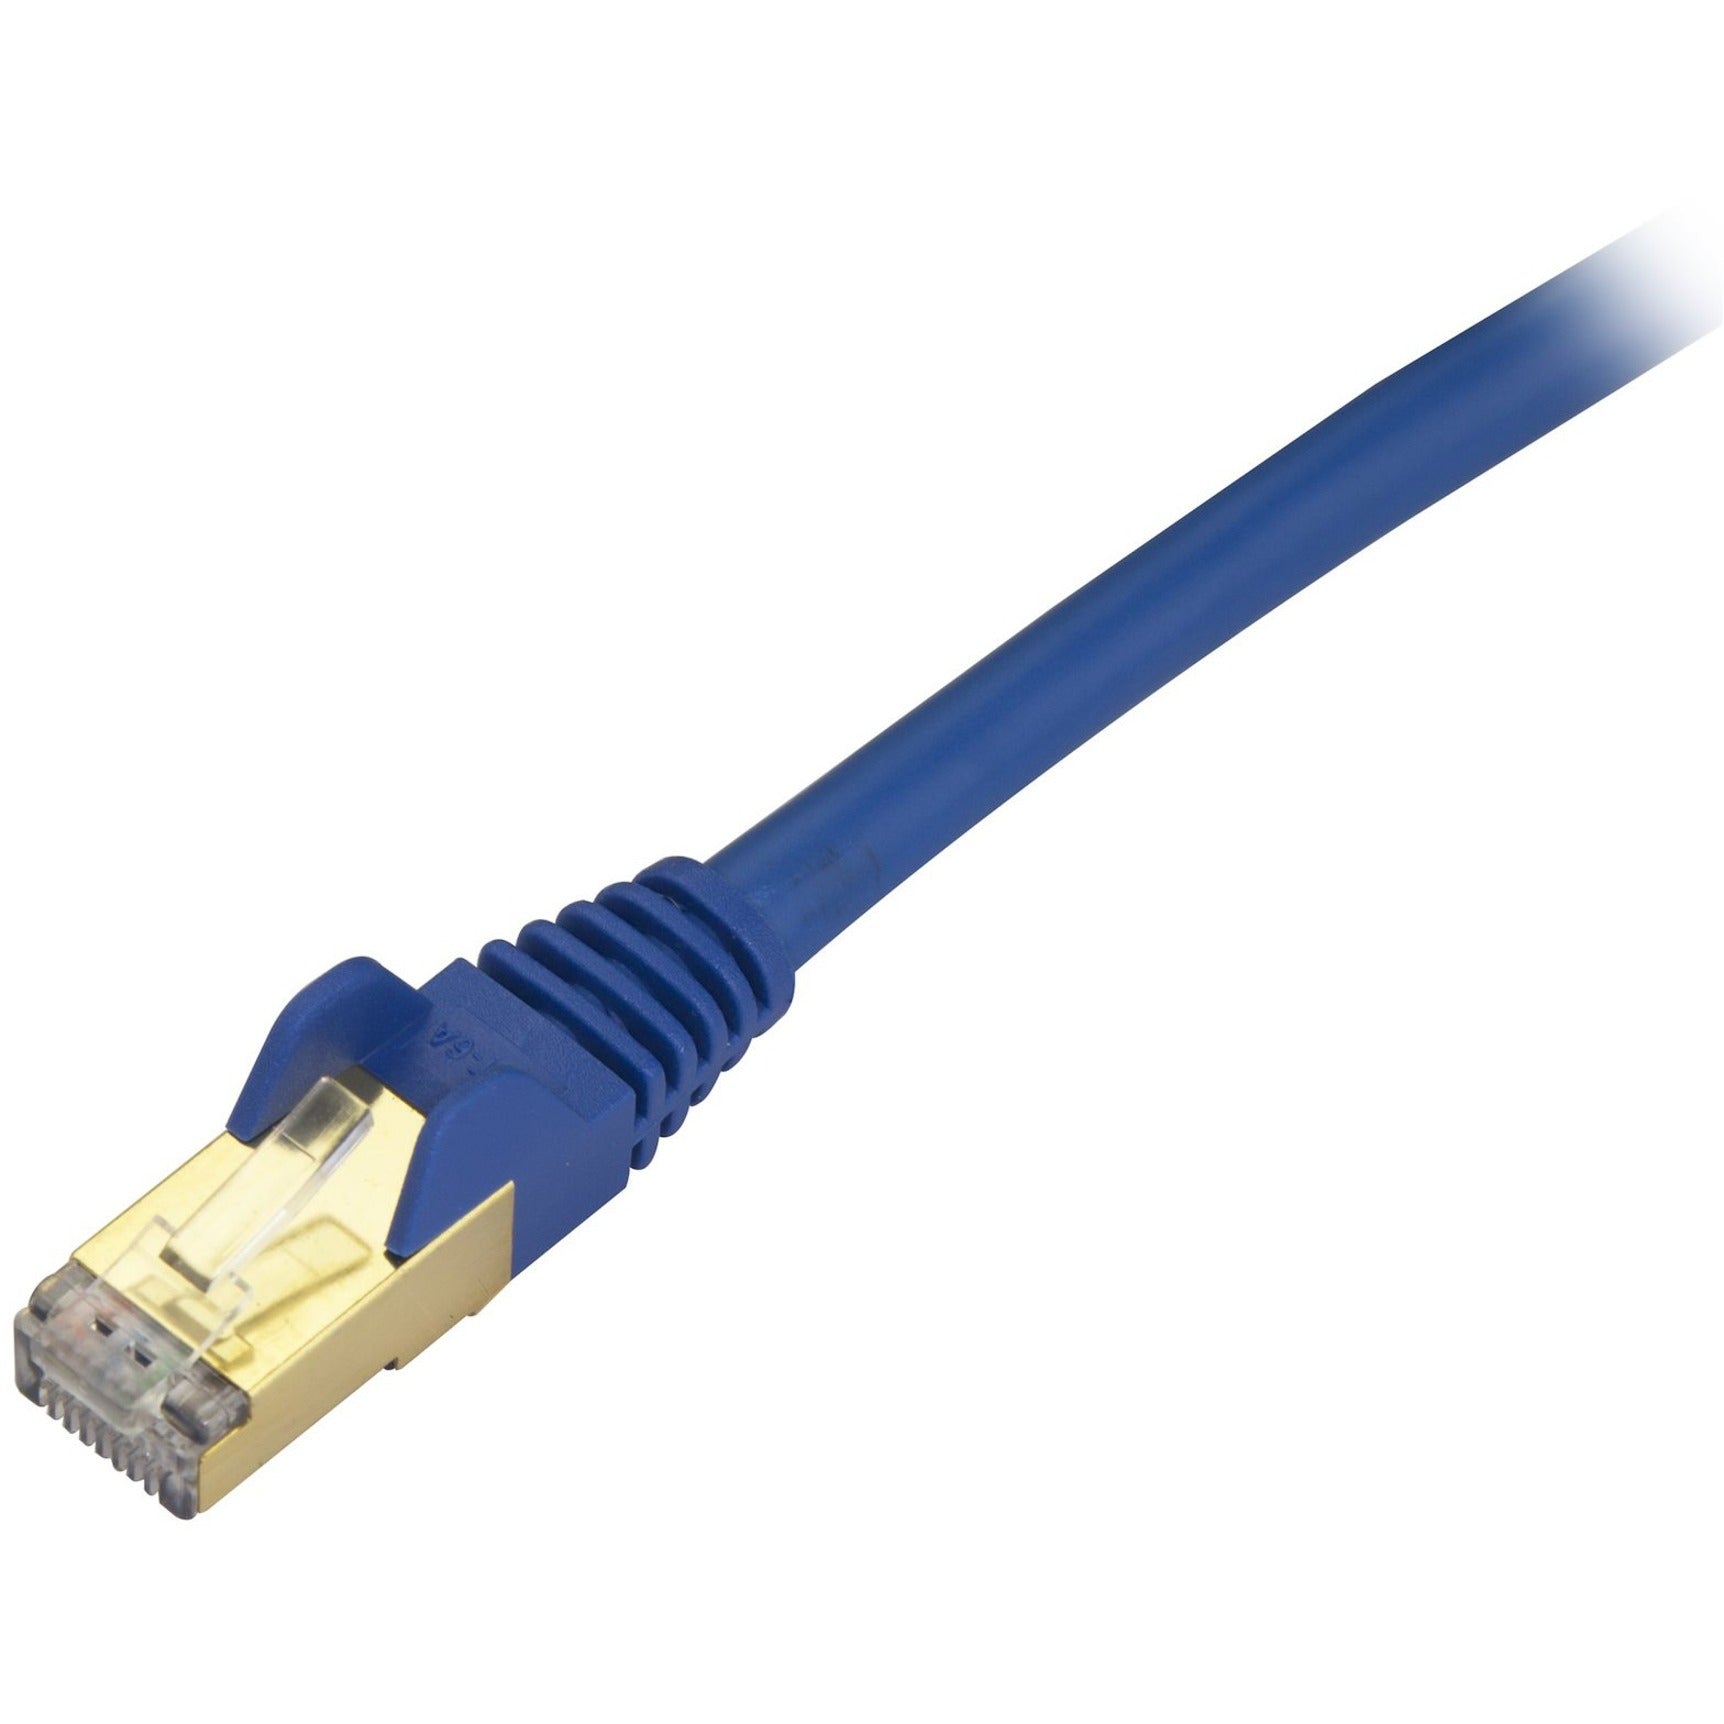 StarTech.com C6ASPAT6BL Cat6a Ethernet Patch Cable - Shielded (STP) - 6 ft., Blue, Snagless RJ45 Ethernet Cord